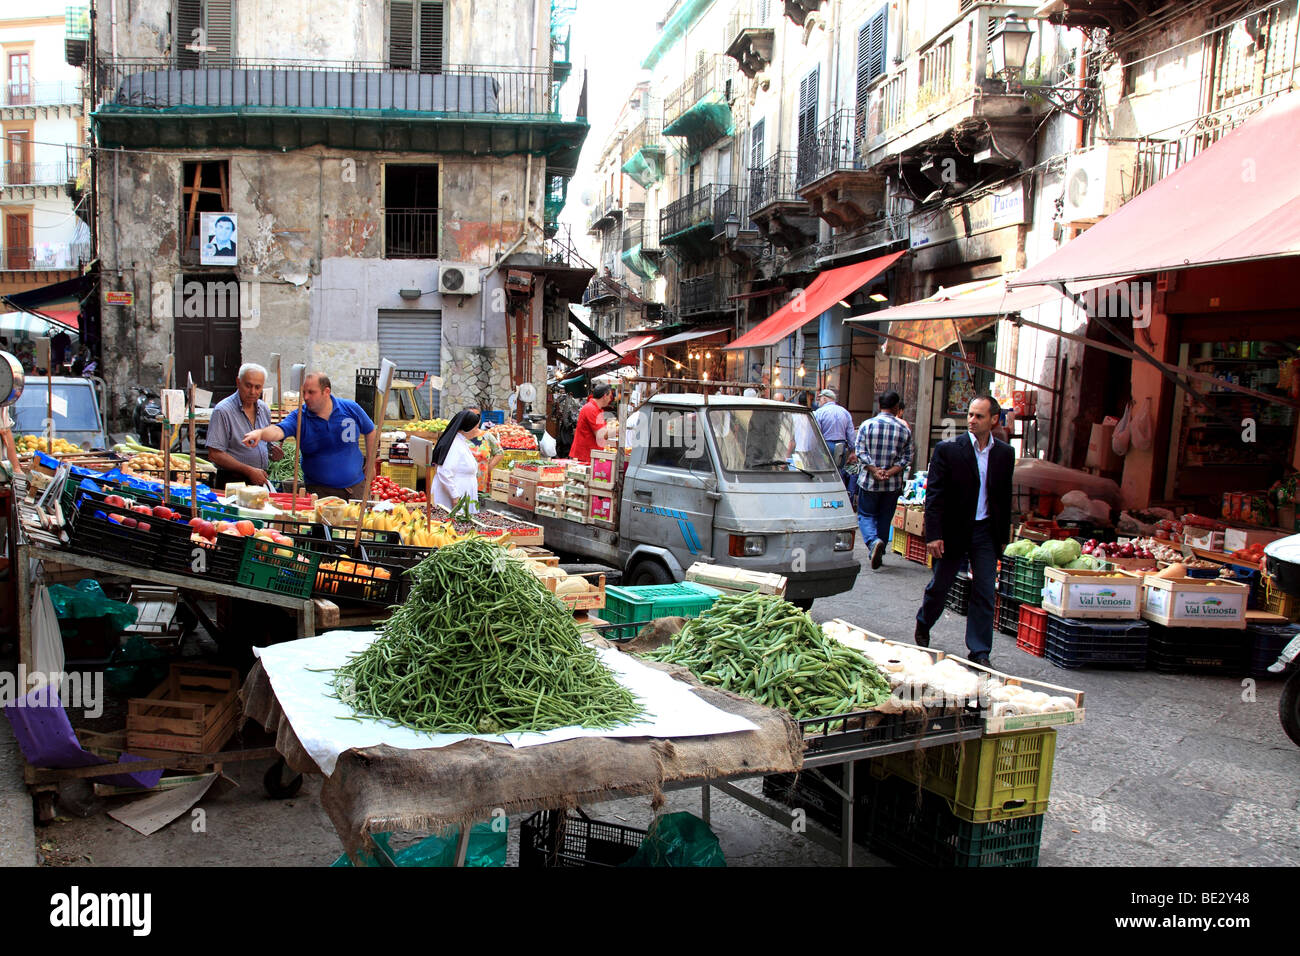 The Capo market in Palermo Sicily Italy Stock Photo